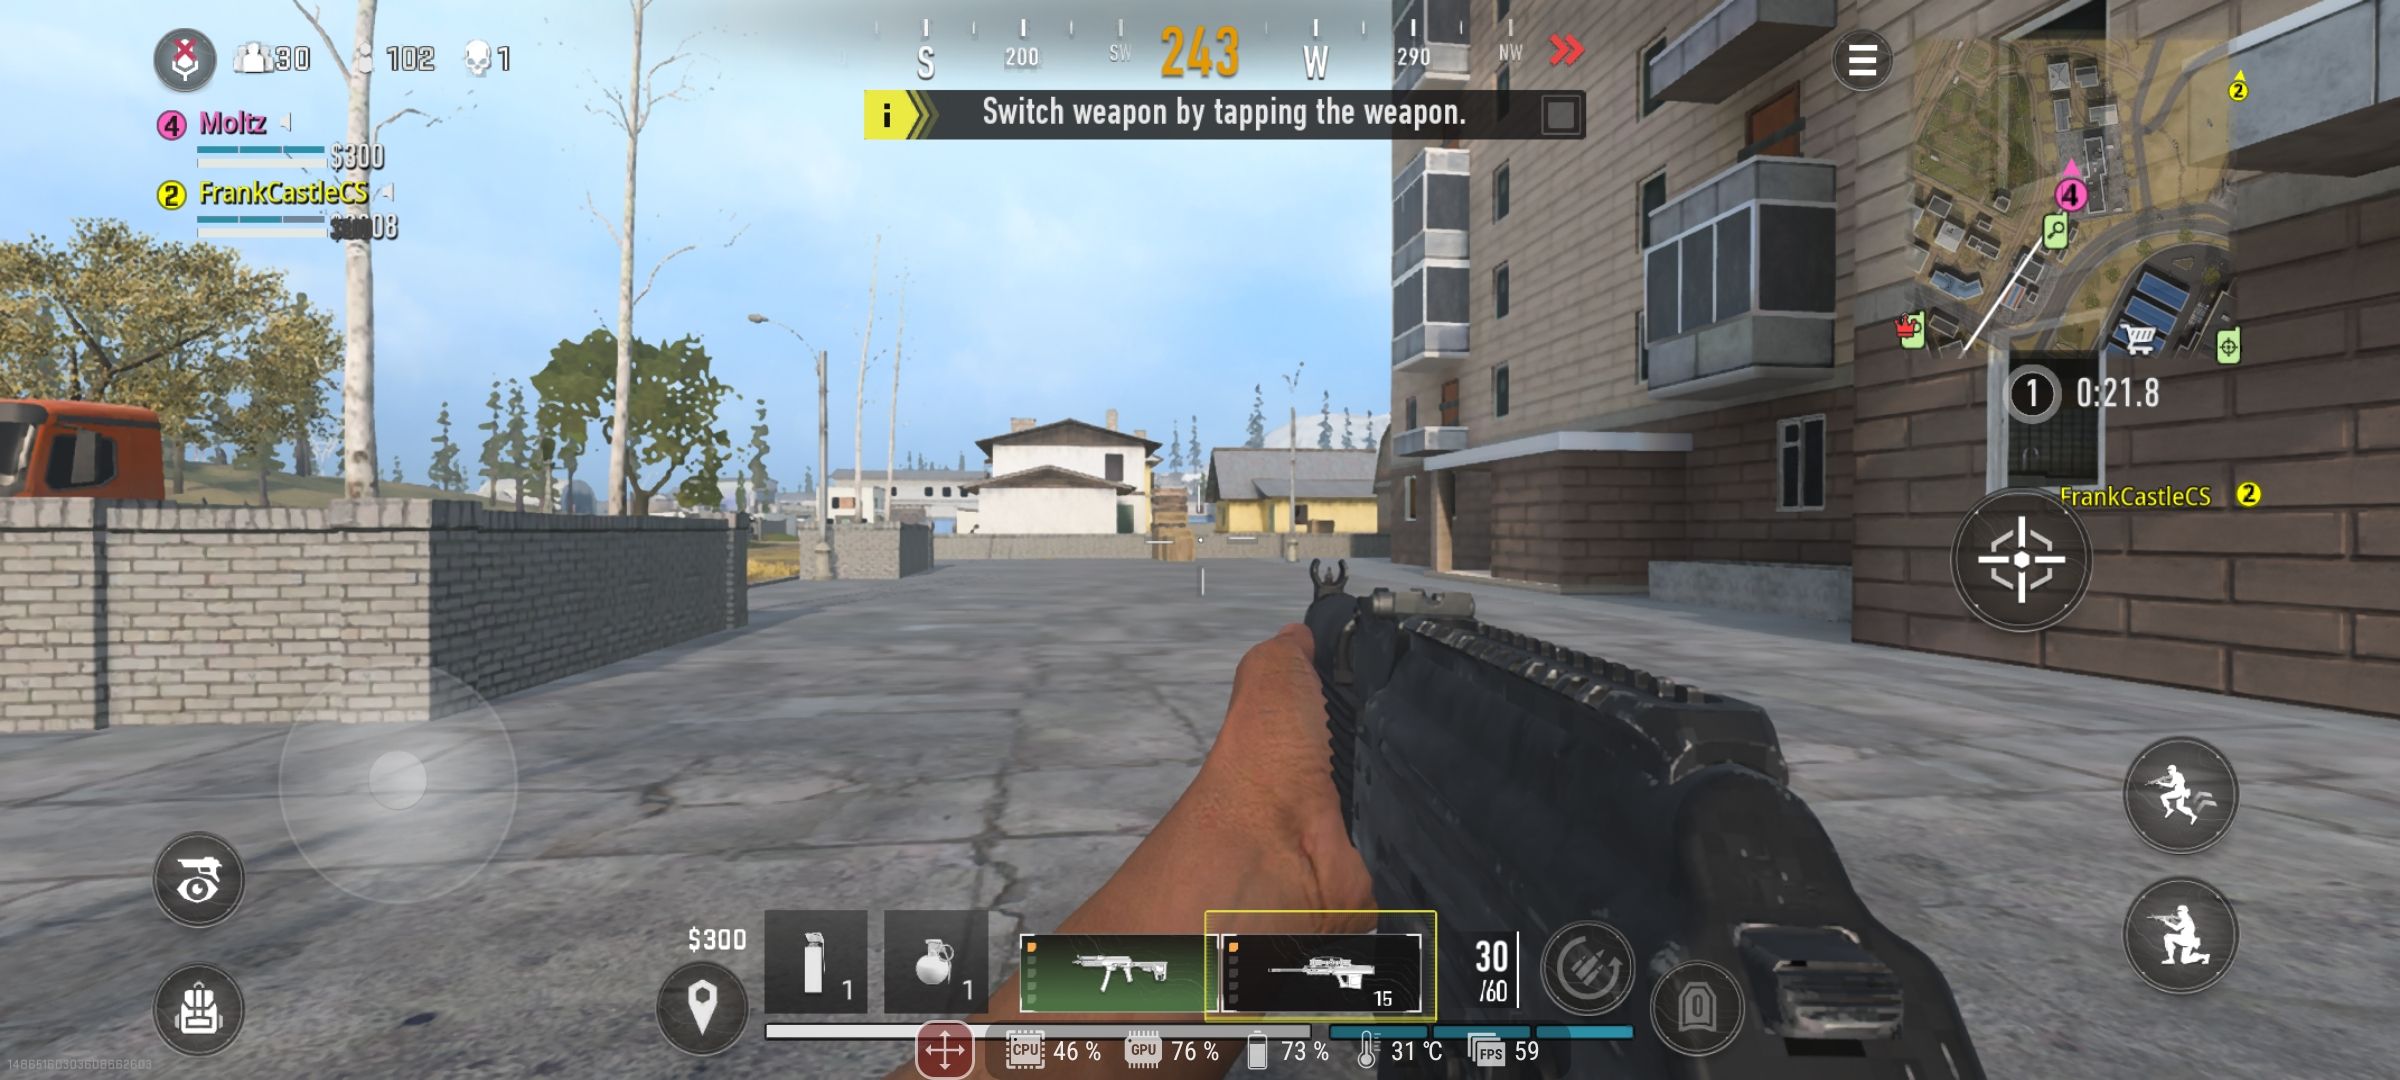 Call of Duty Warzone Mobile screenshot showing gameplay holding gun